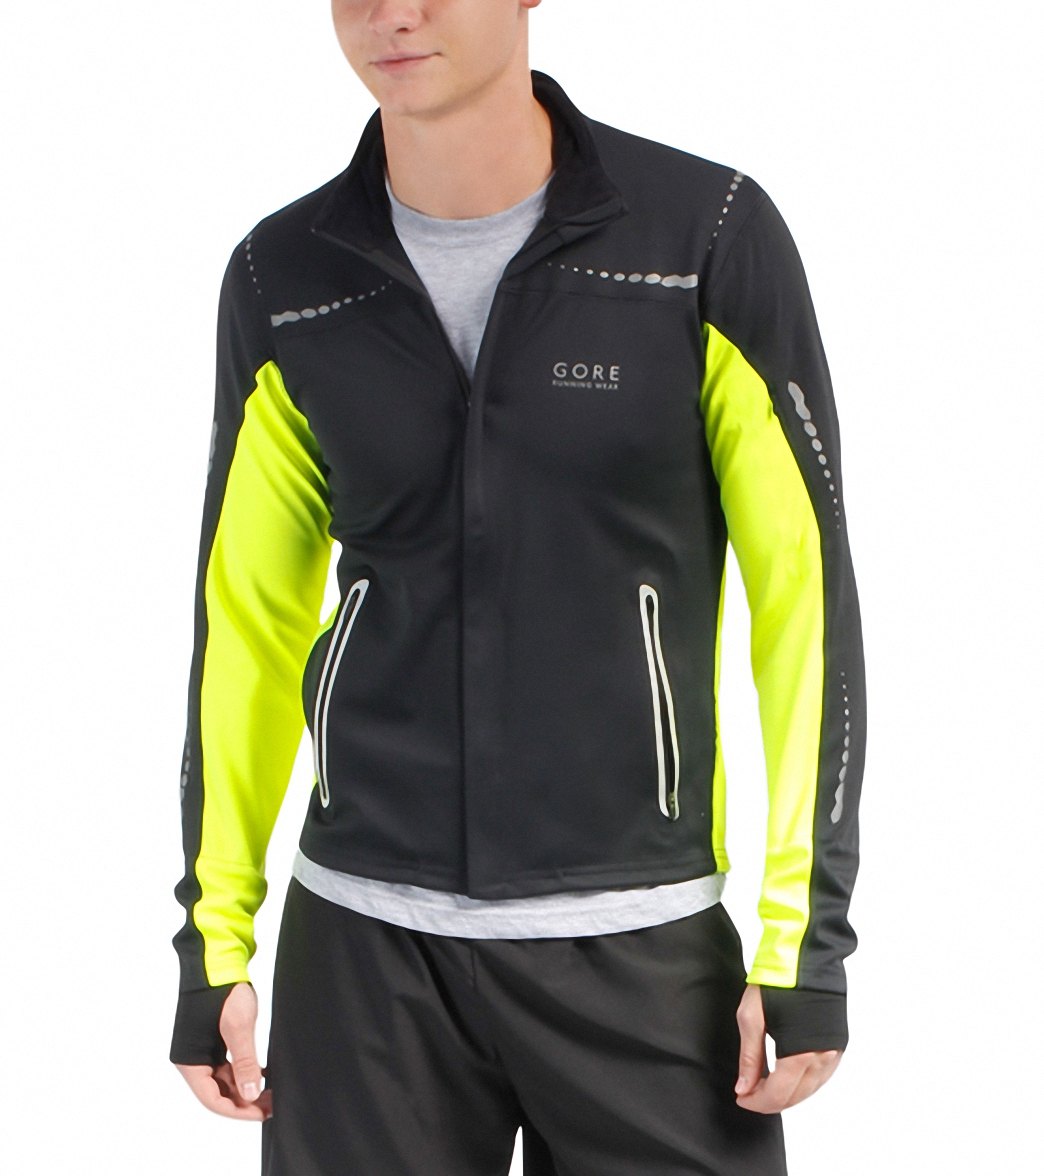 Gore Men's Mythos So Running Jacket - Neon Yellow / Black Xxl Polyester - Swimoutlet.com